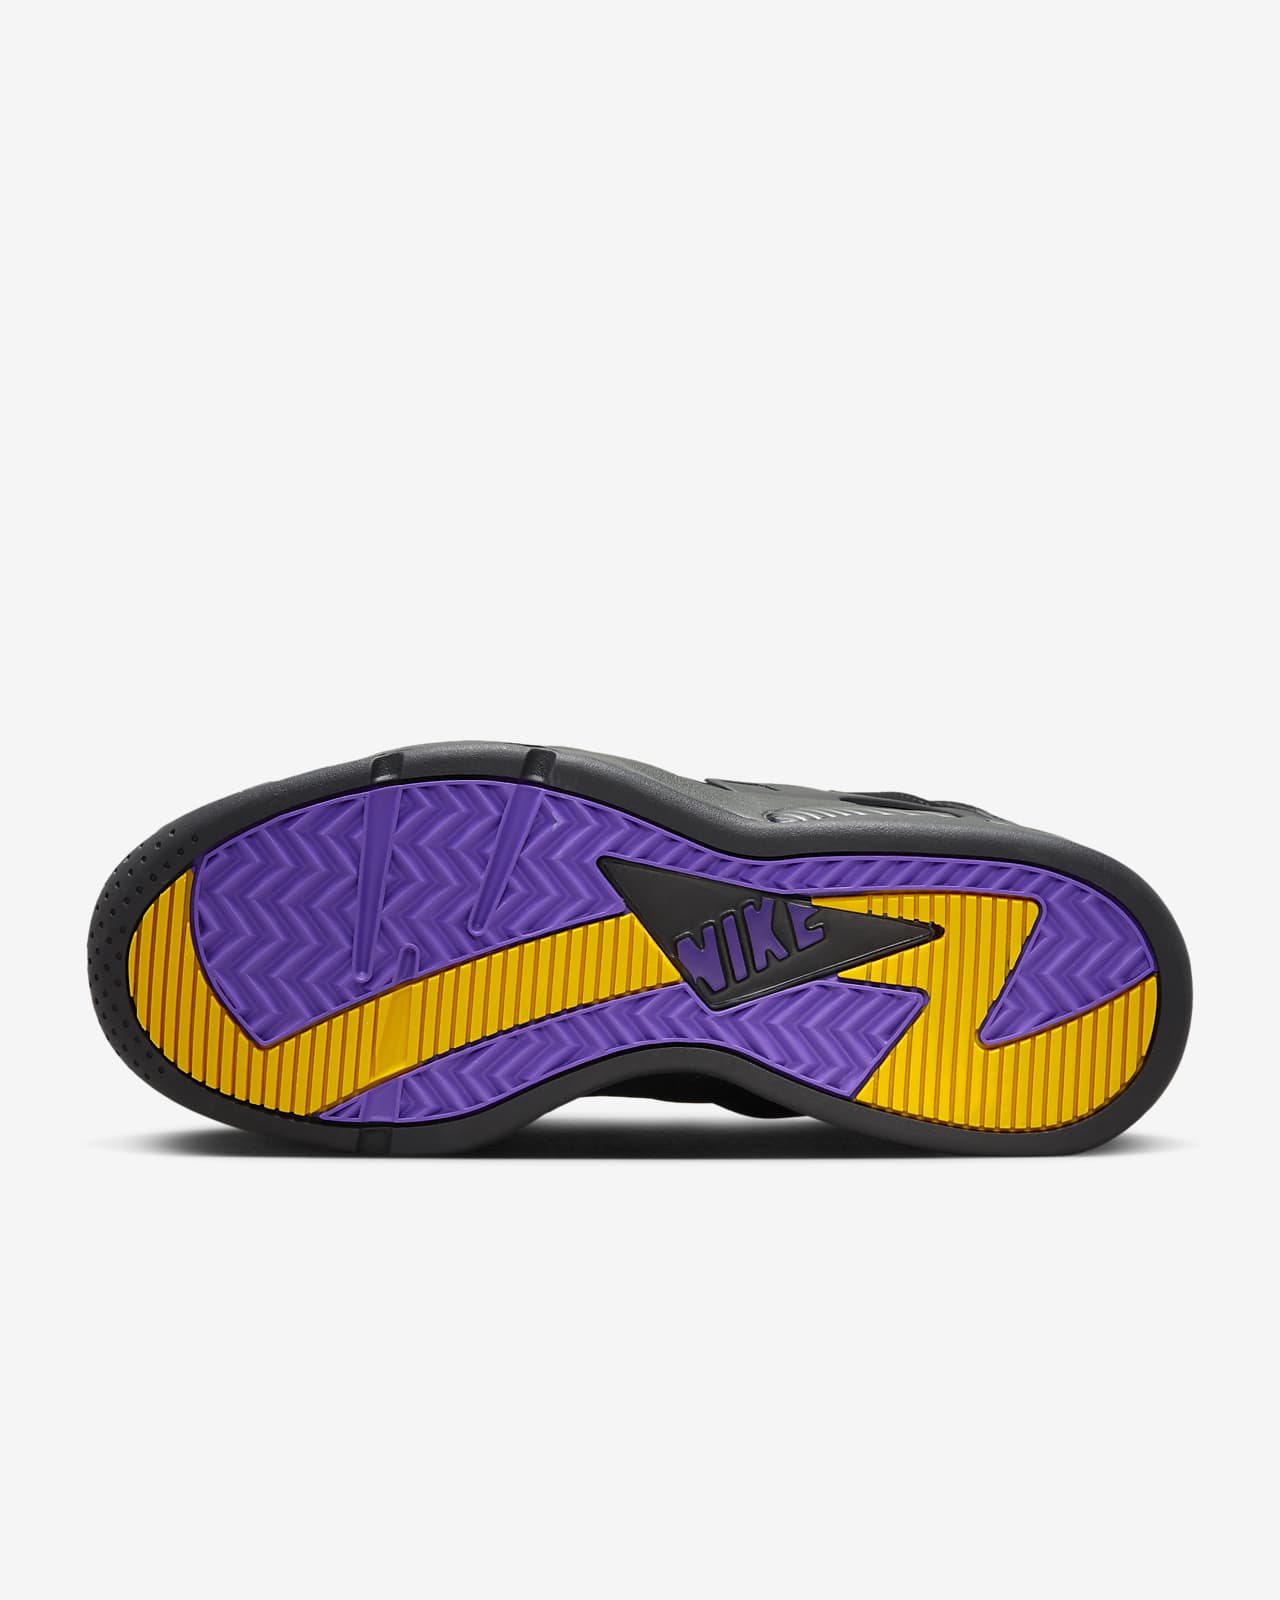 Nike Men's Air Flight Huarache Ultra Basketball Shoe